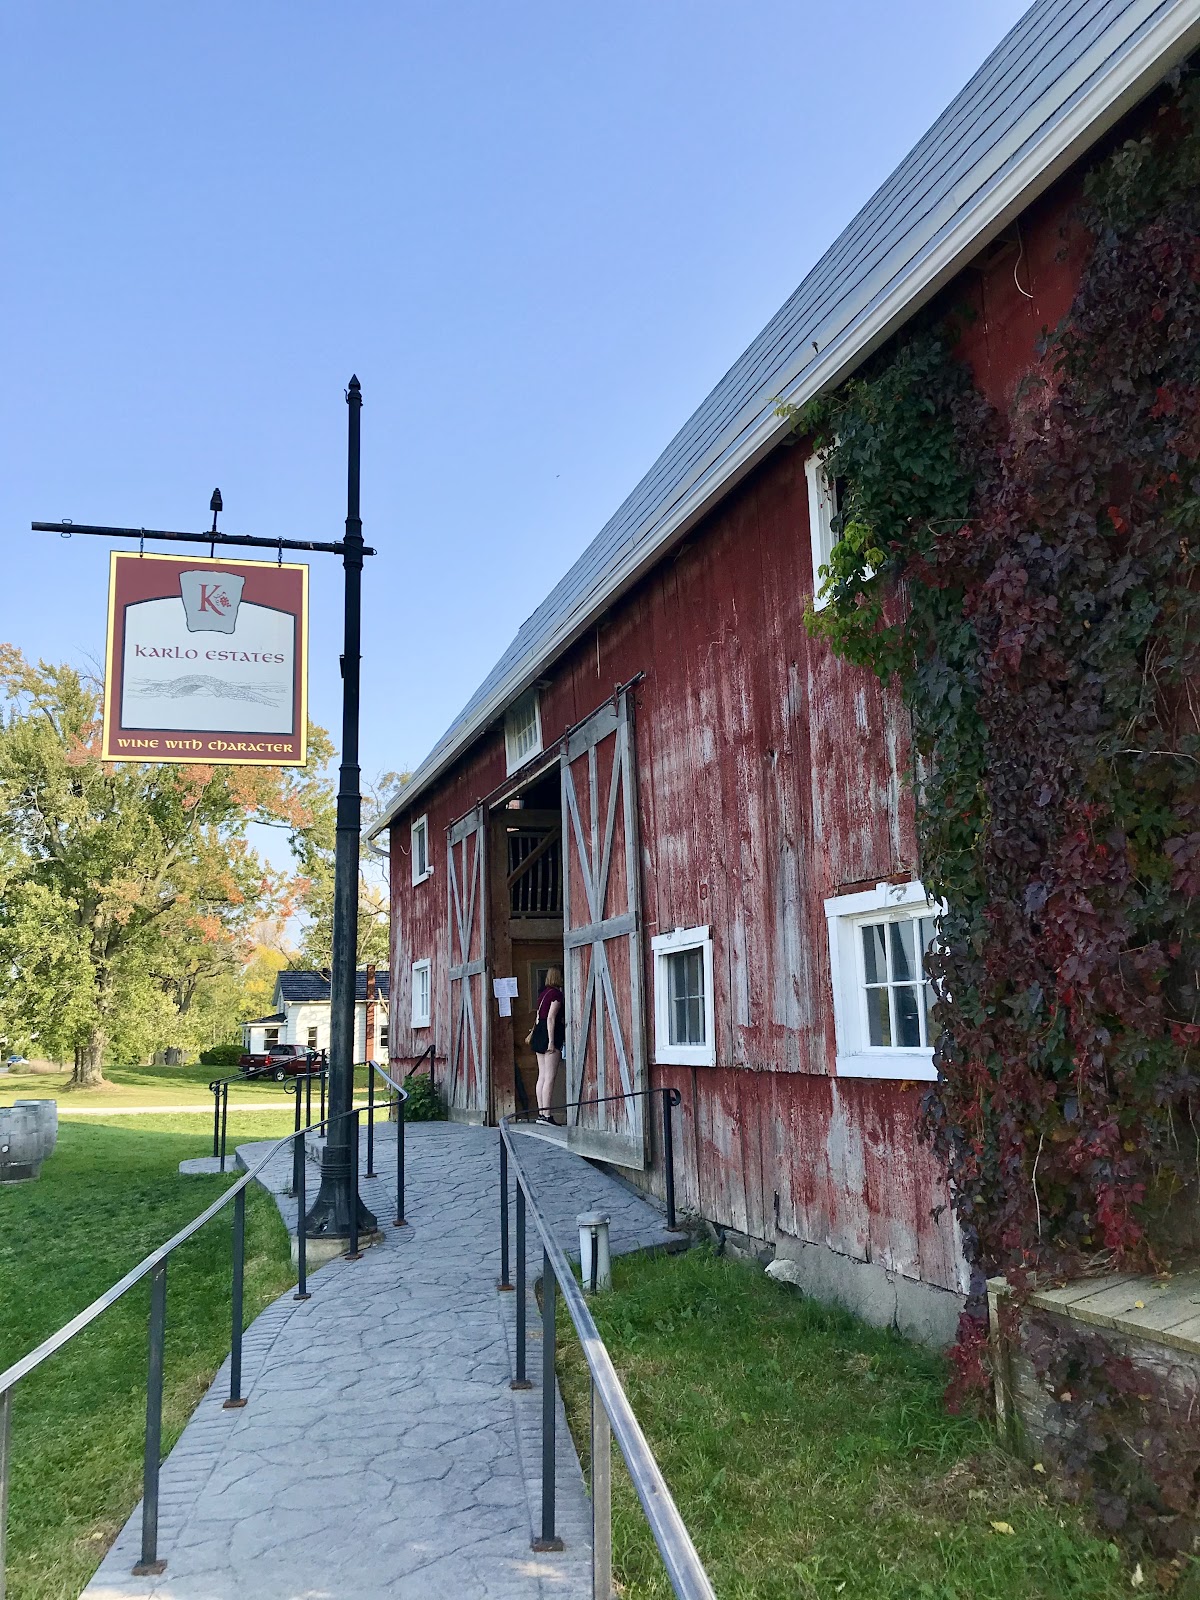 karlo estates winery